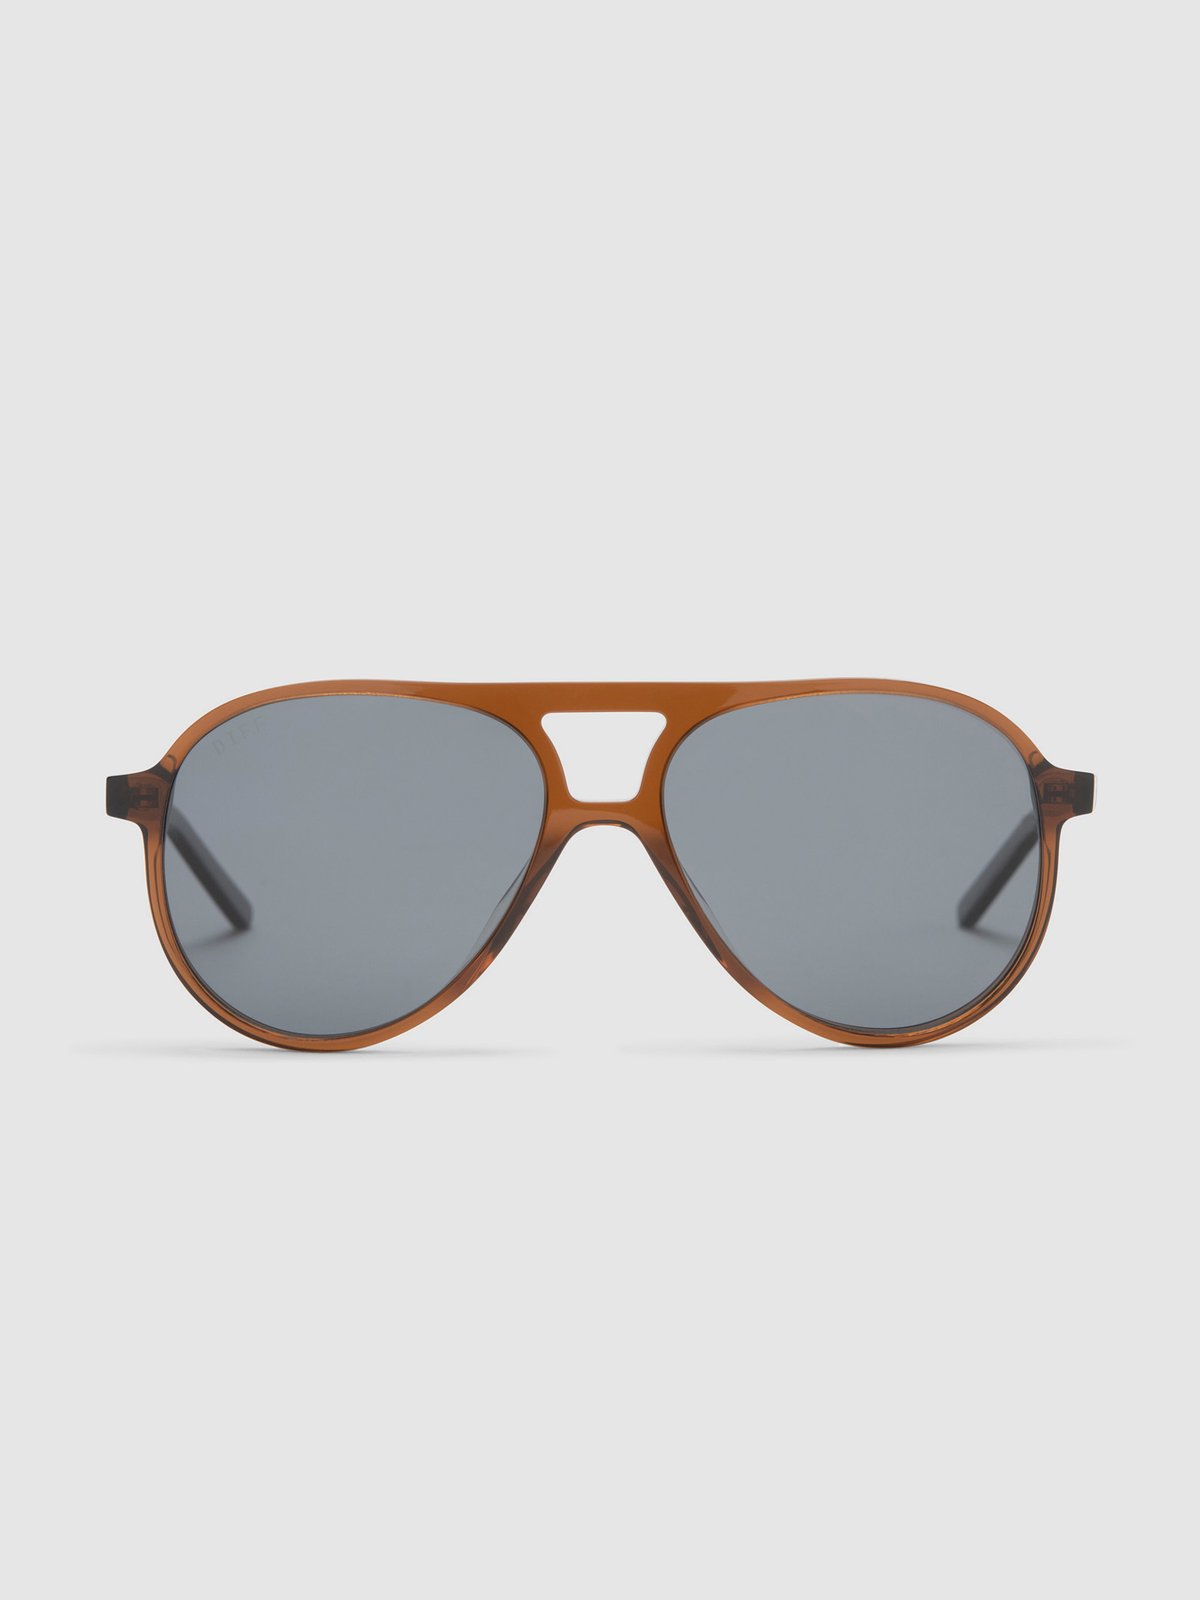 Diff Eyewear Jett Aviator Sunglasses | Verishop